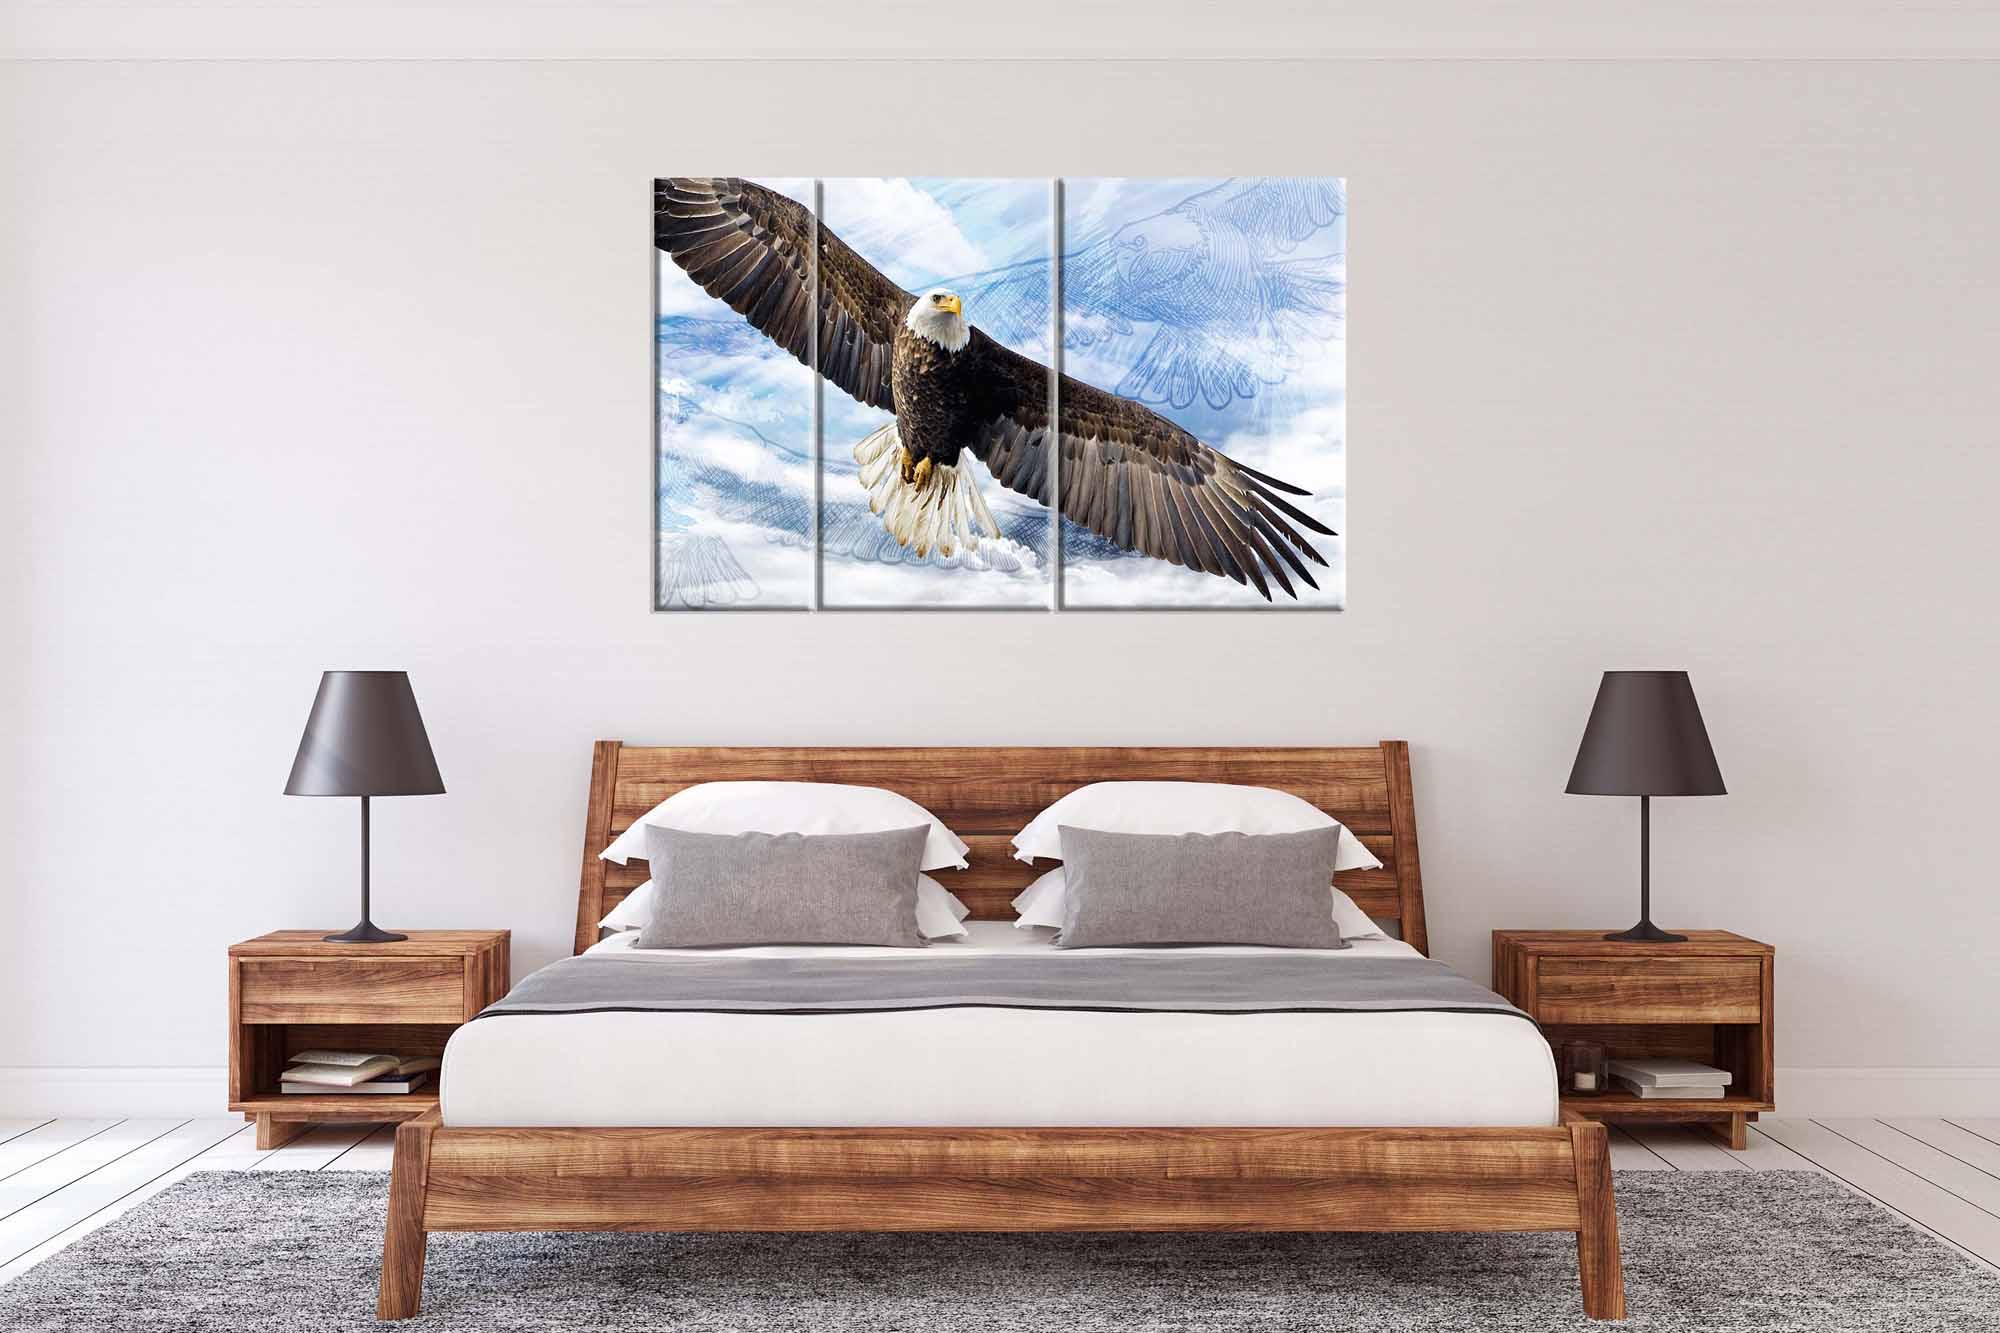 Picture Modular picture - bald eagle 2